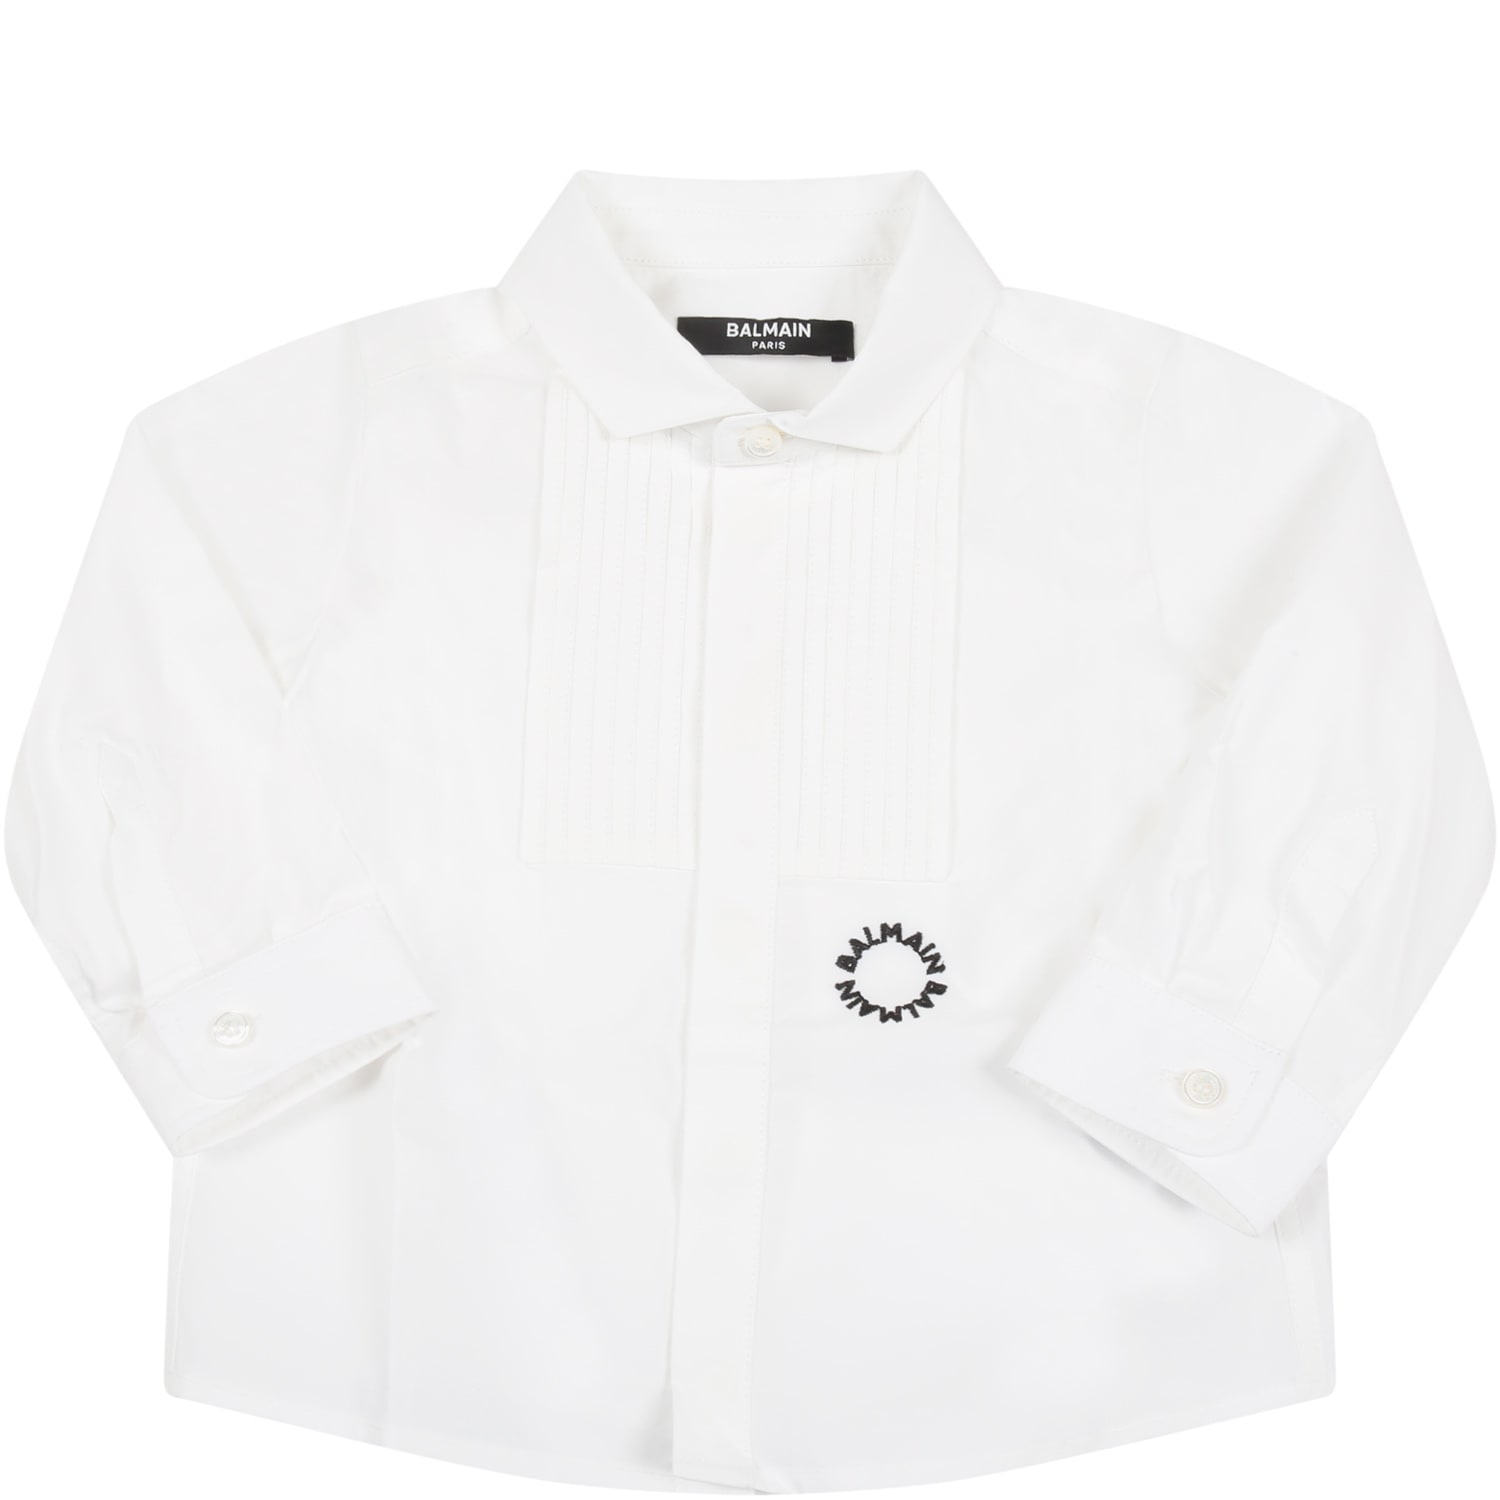 Balmain White Shirt For Baby Boy With Logos